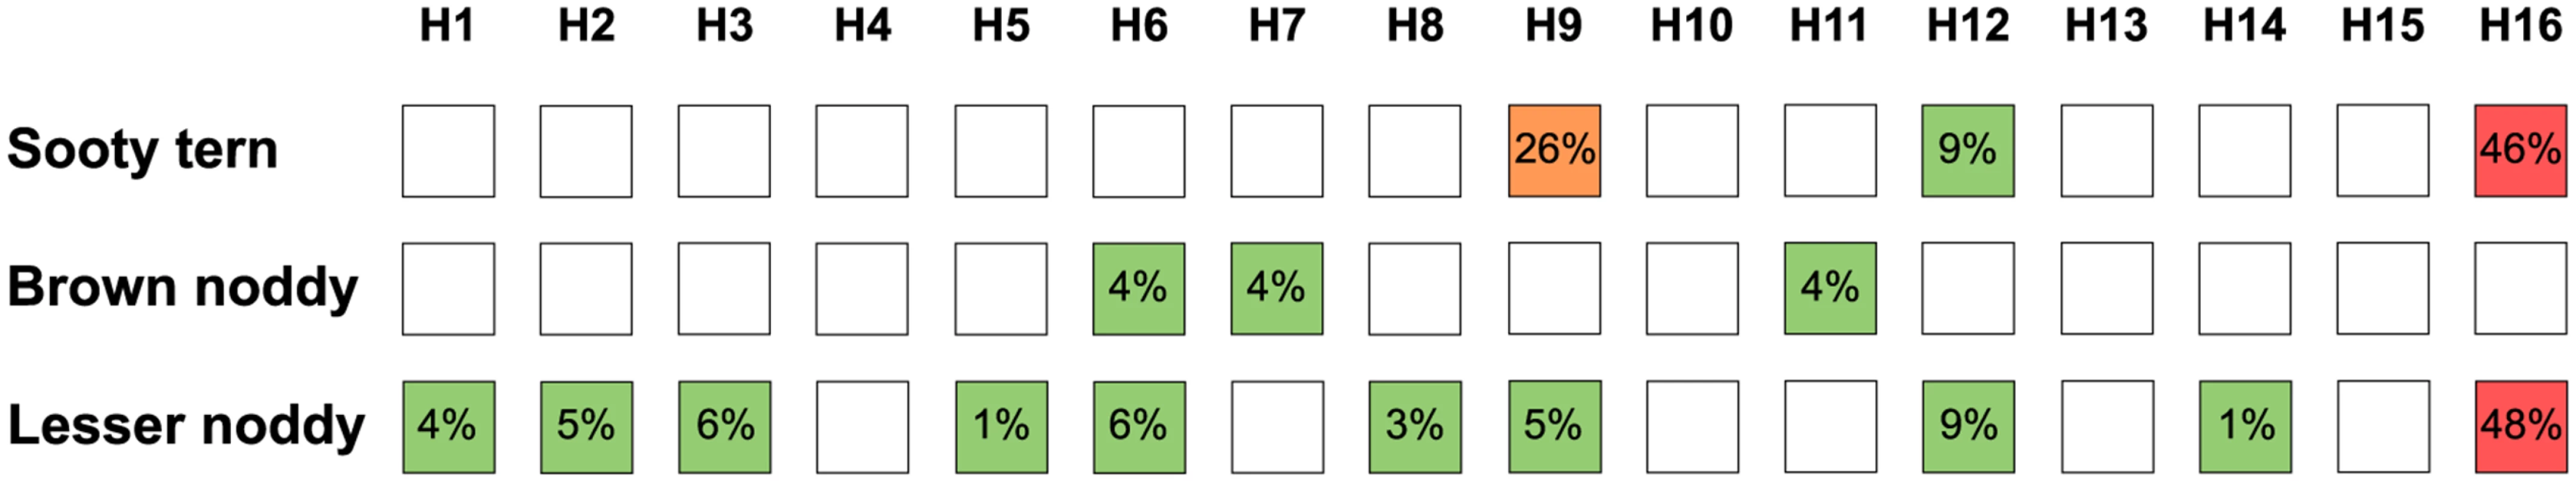 Hemagglutinin (HA)-specific antibody diversity in species in the Charadriiformes order.